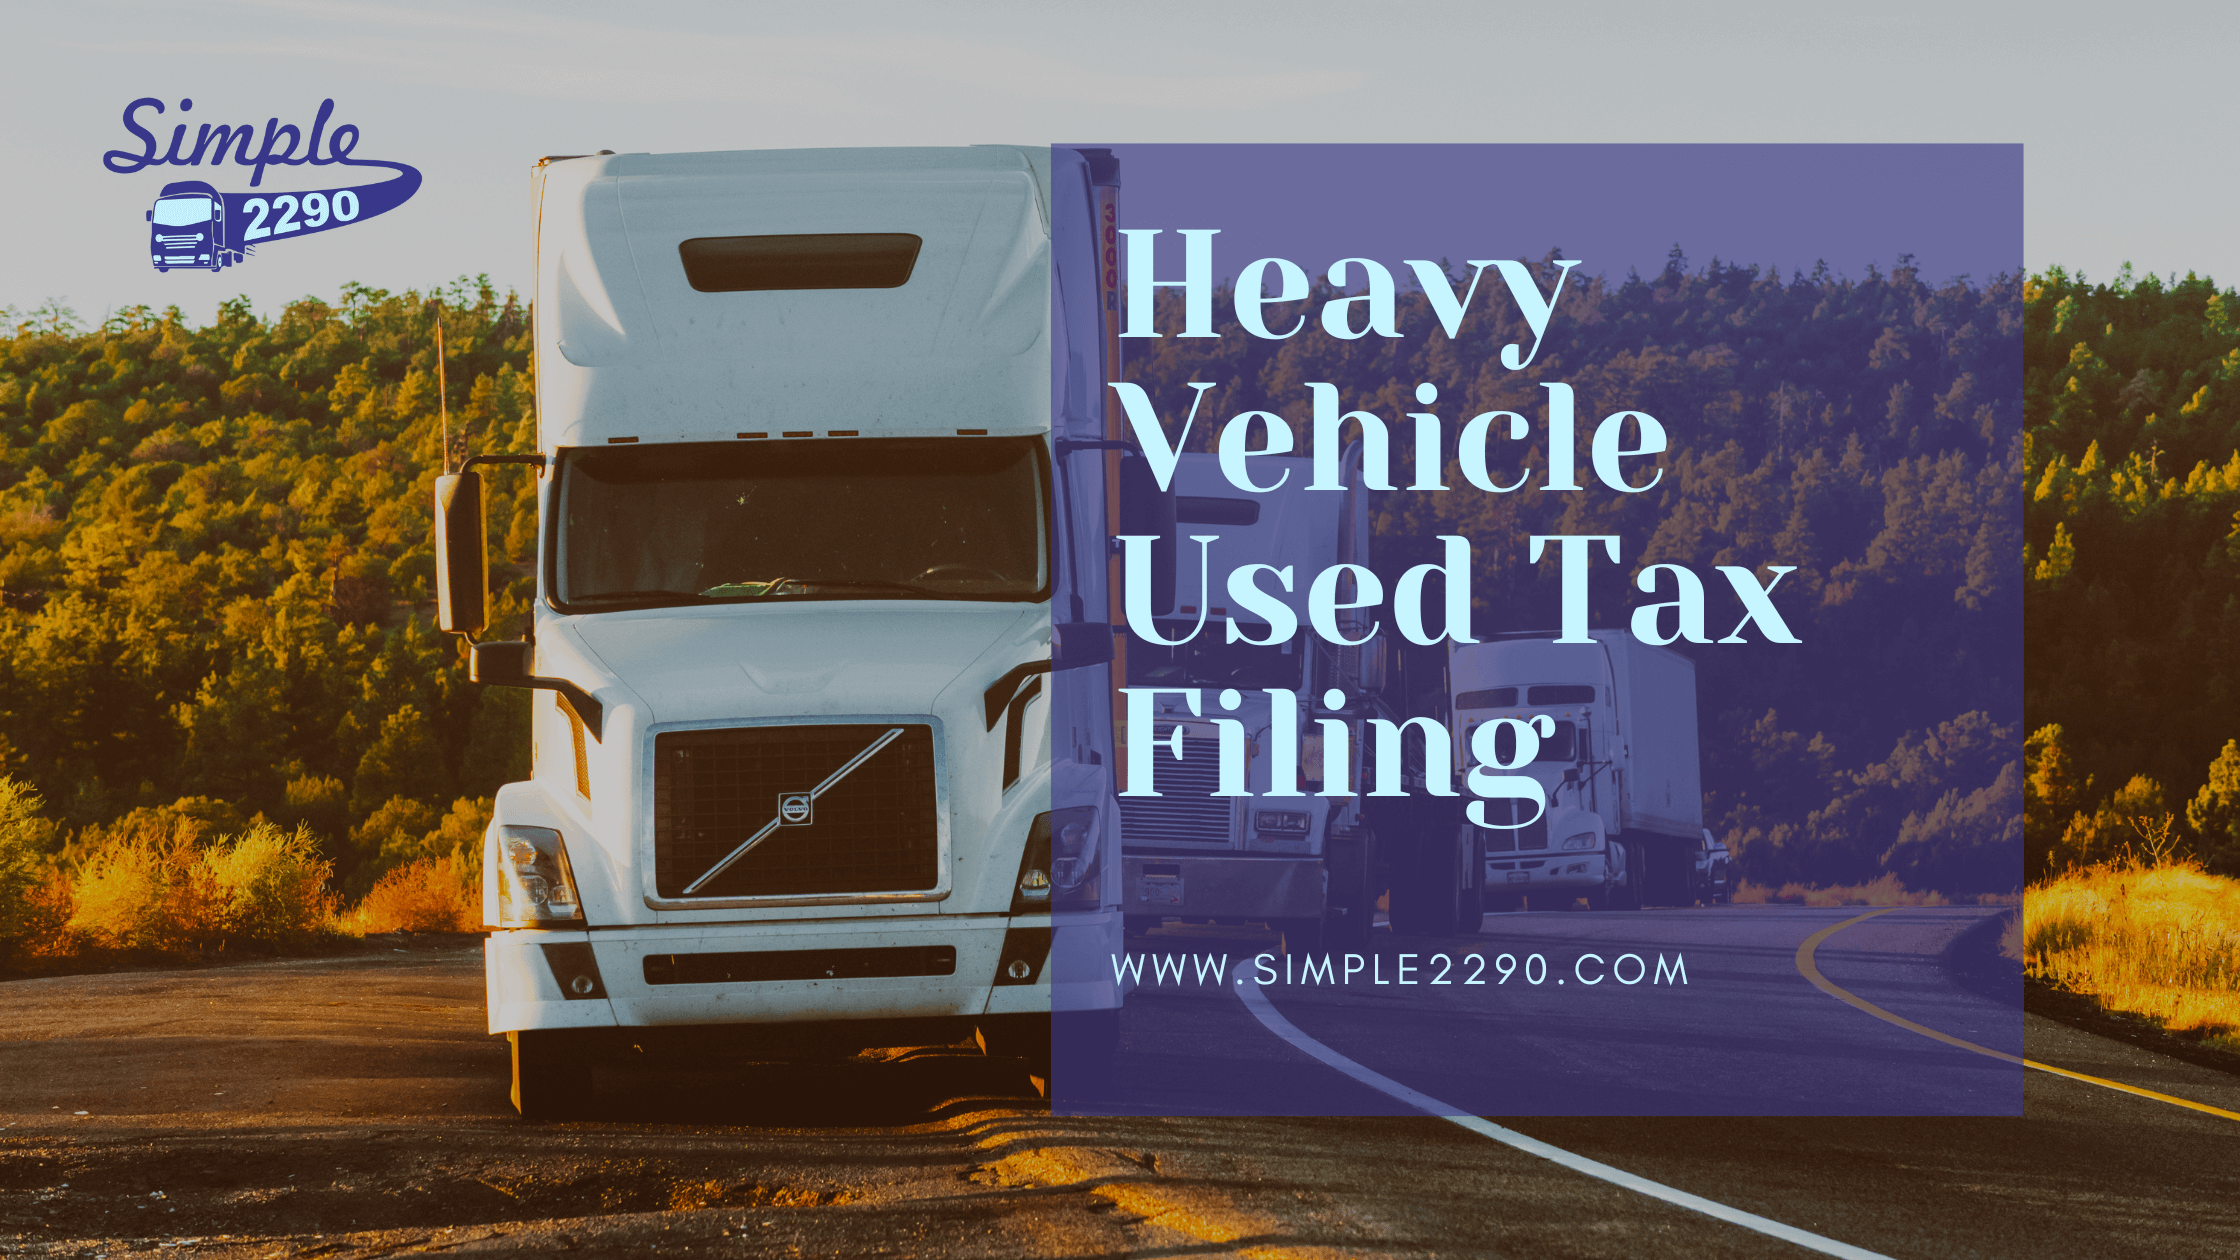 Heavy Vehicle Used Tax Filing